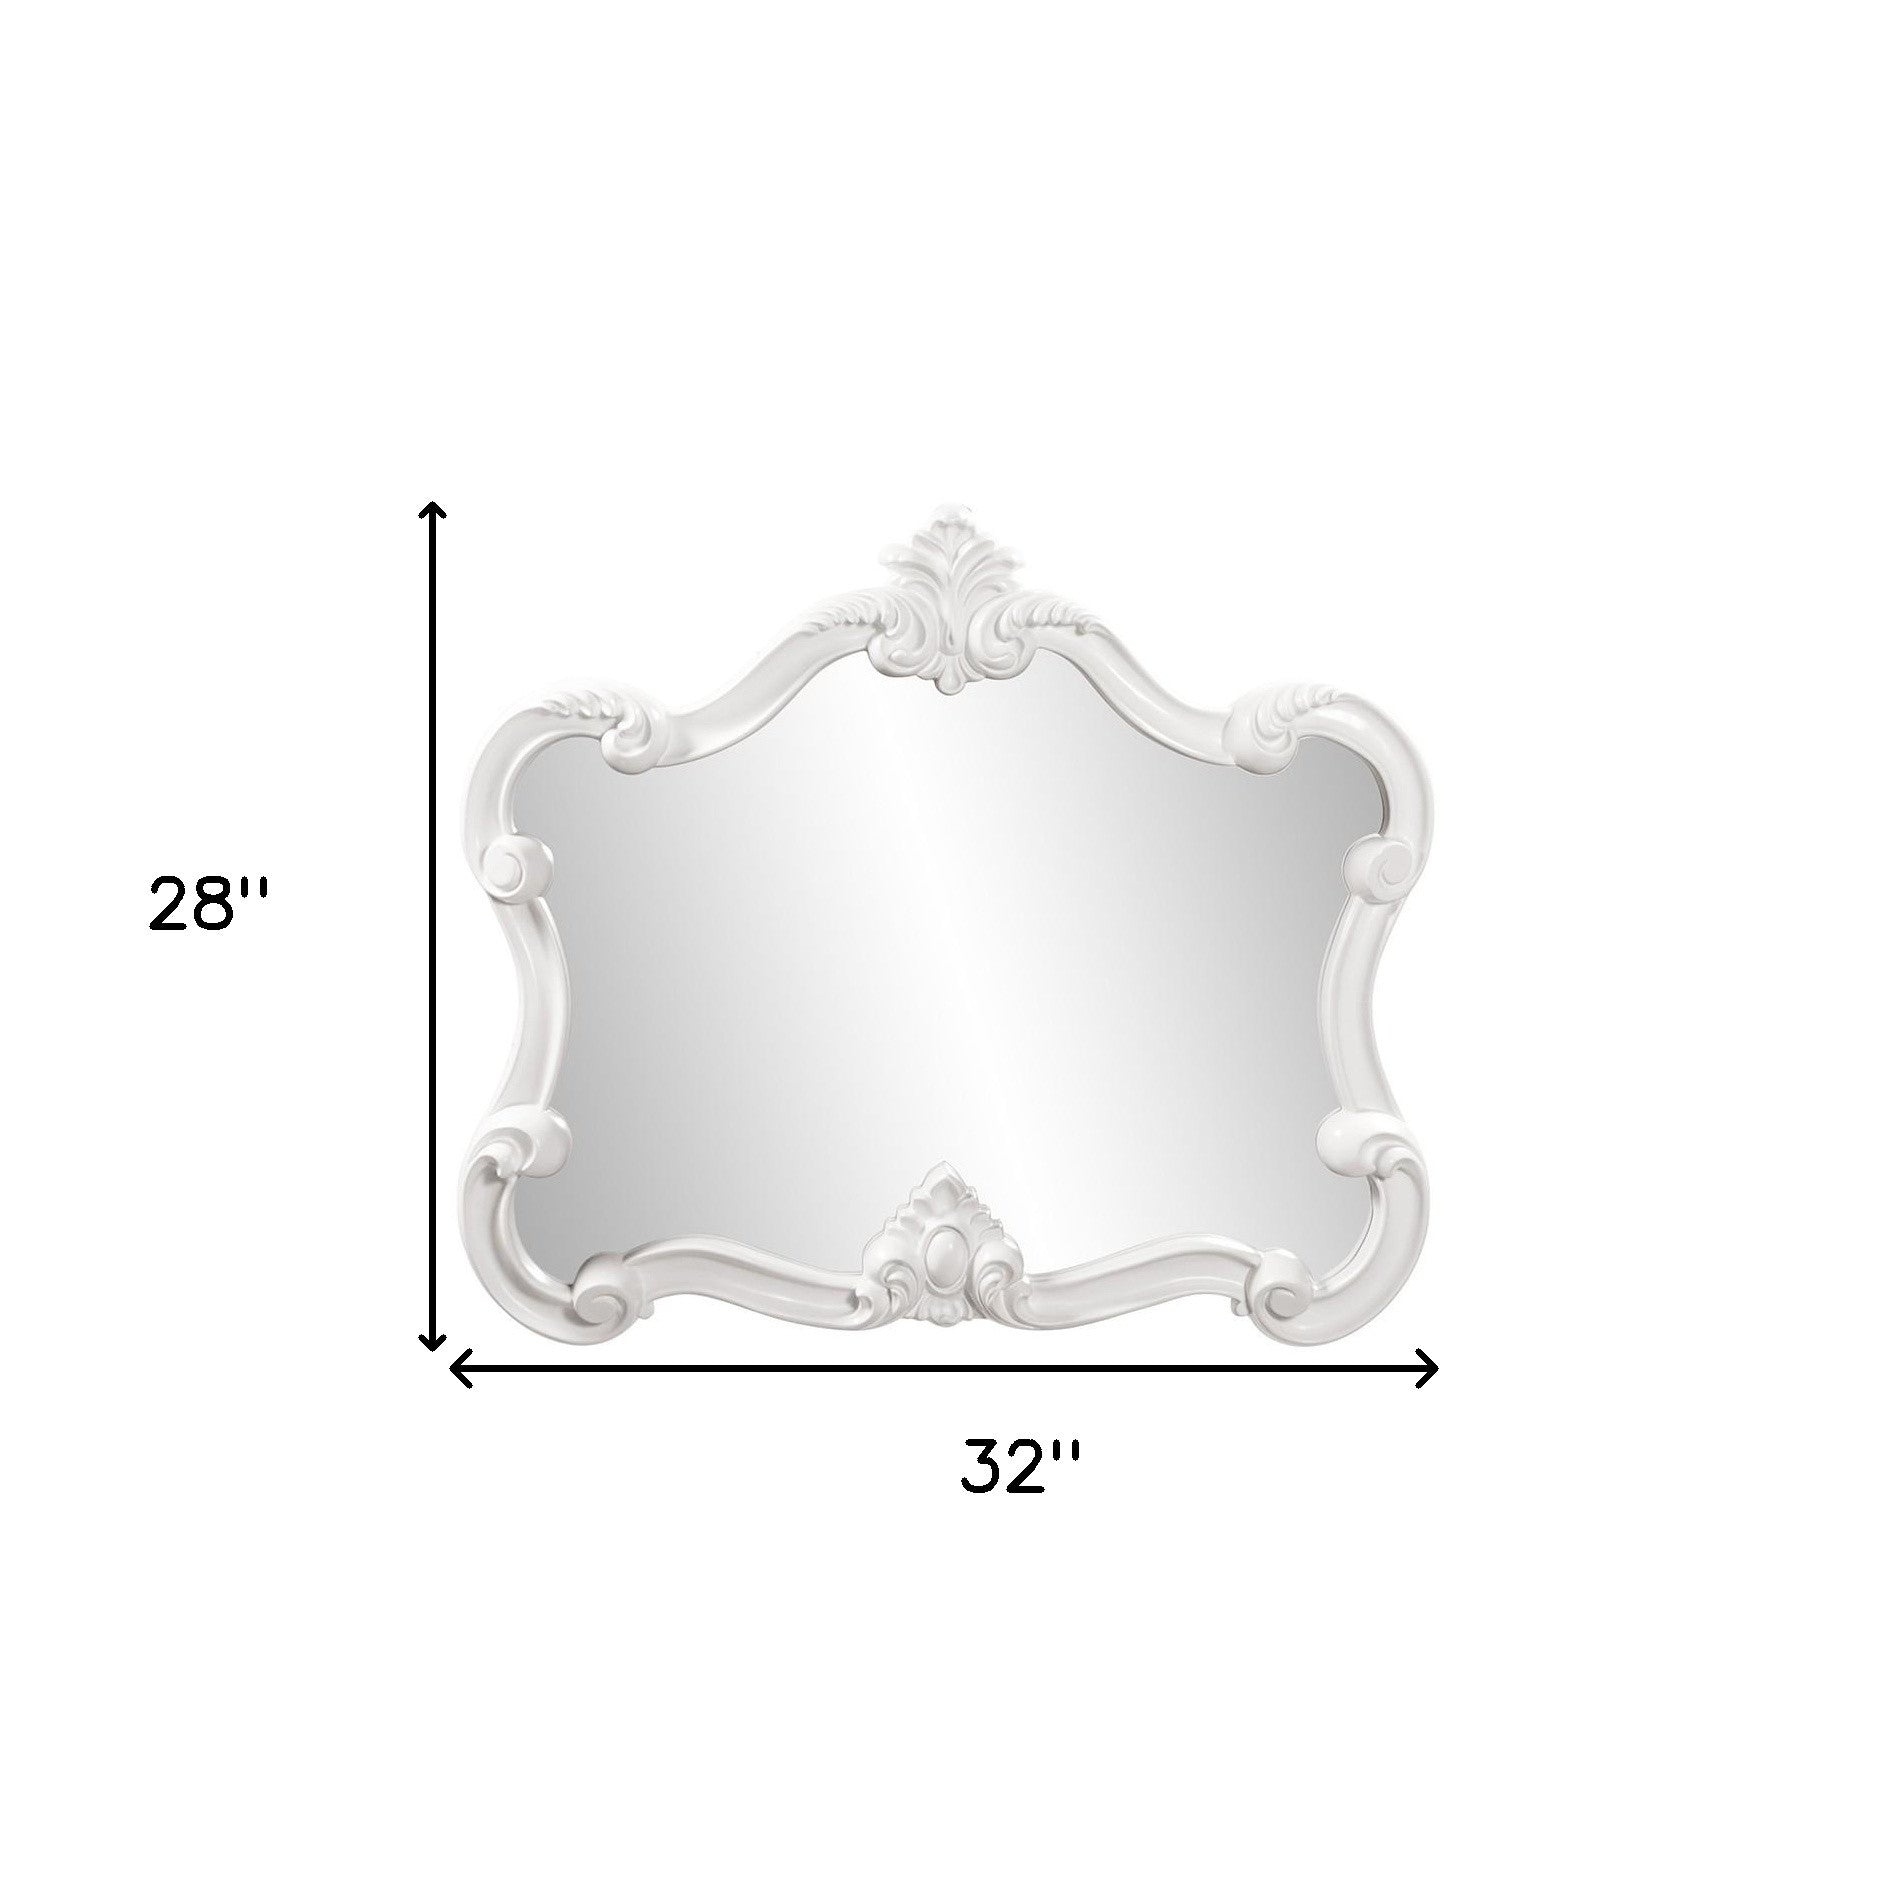 28" White Framed Accent Mirror